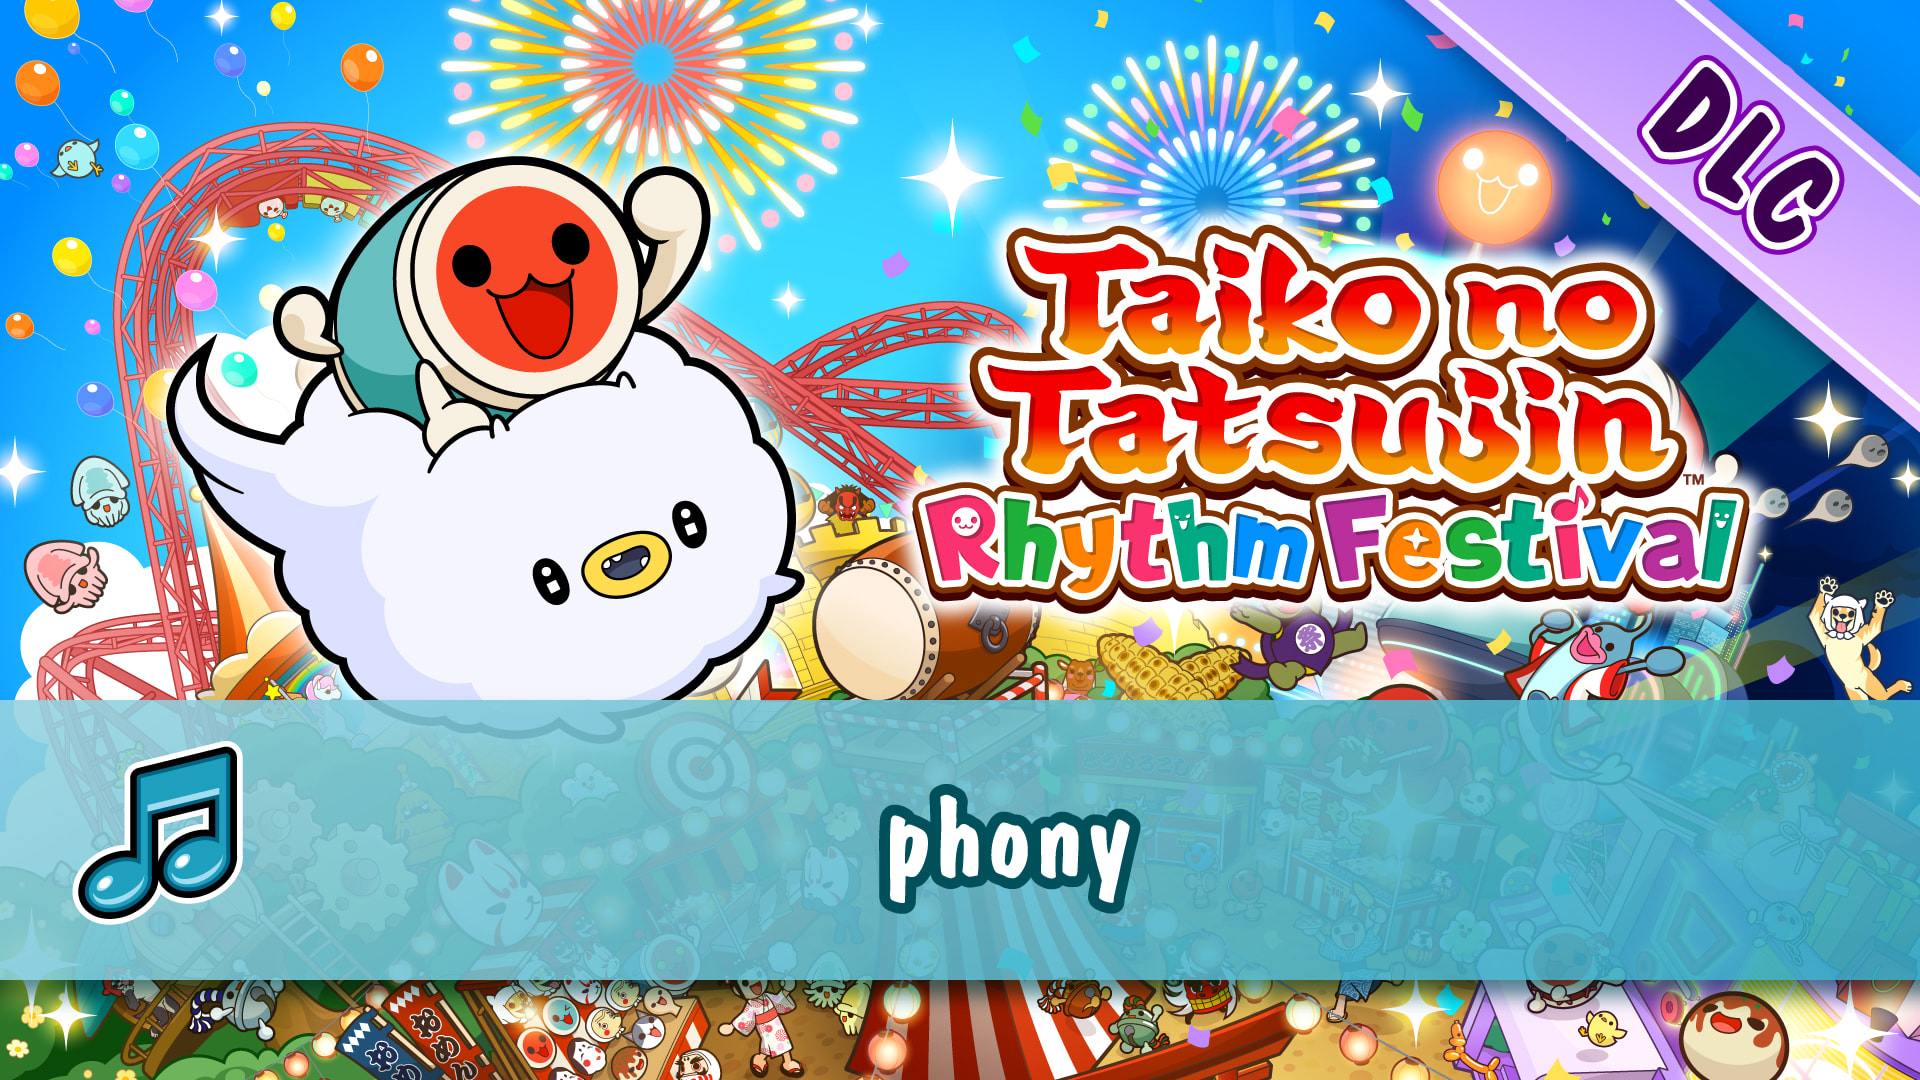 Taiko no Tatsujin: Rhythm Festival - phony